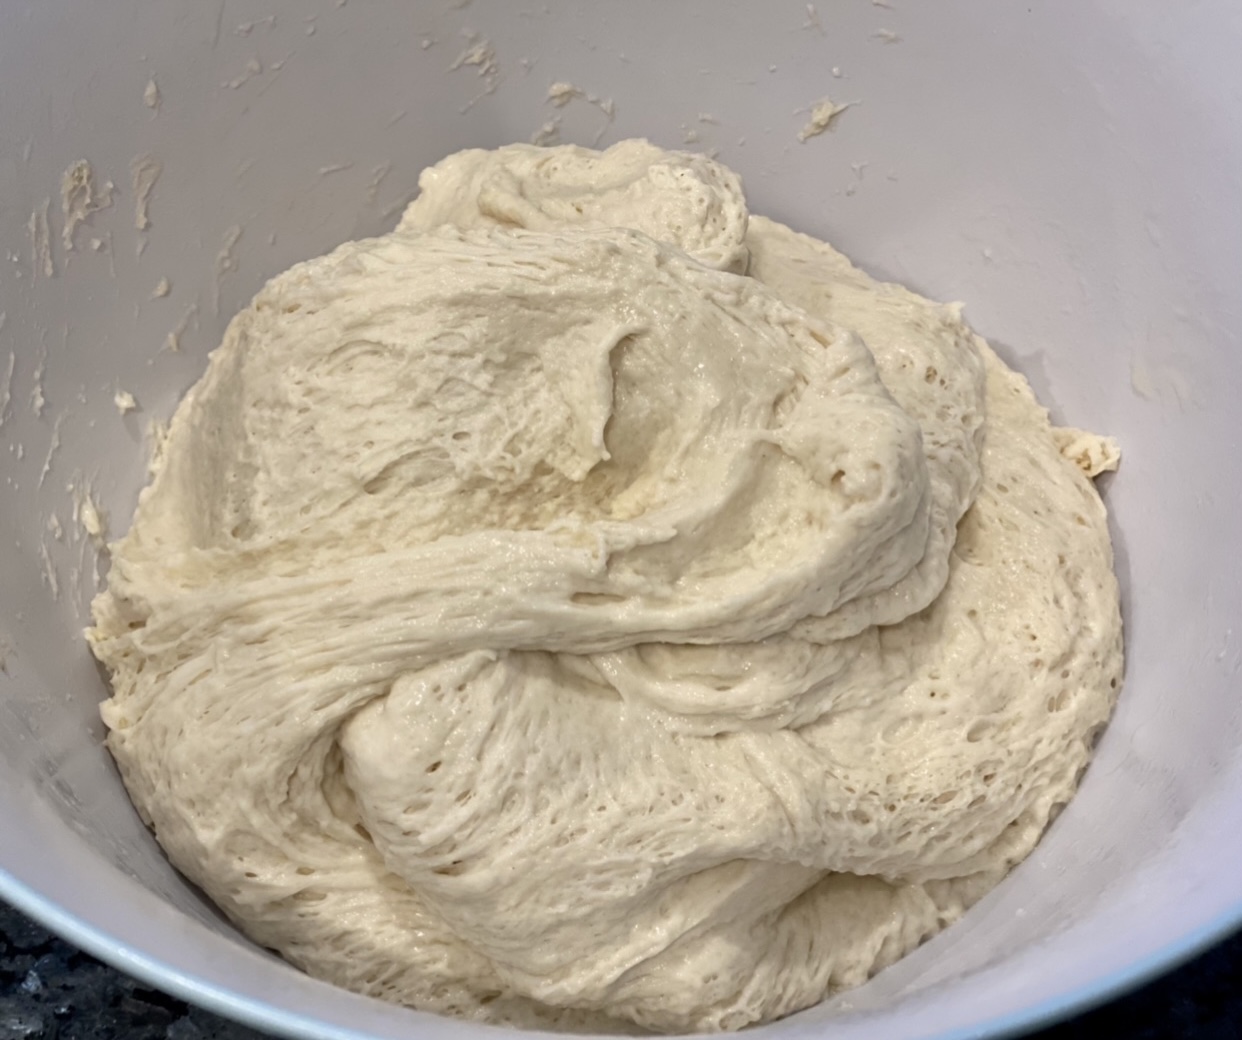 making the dough